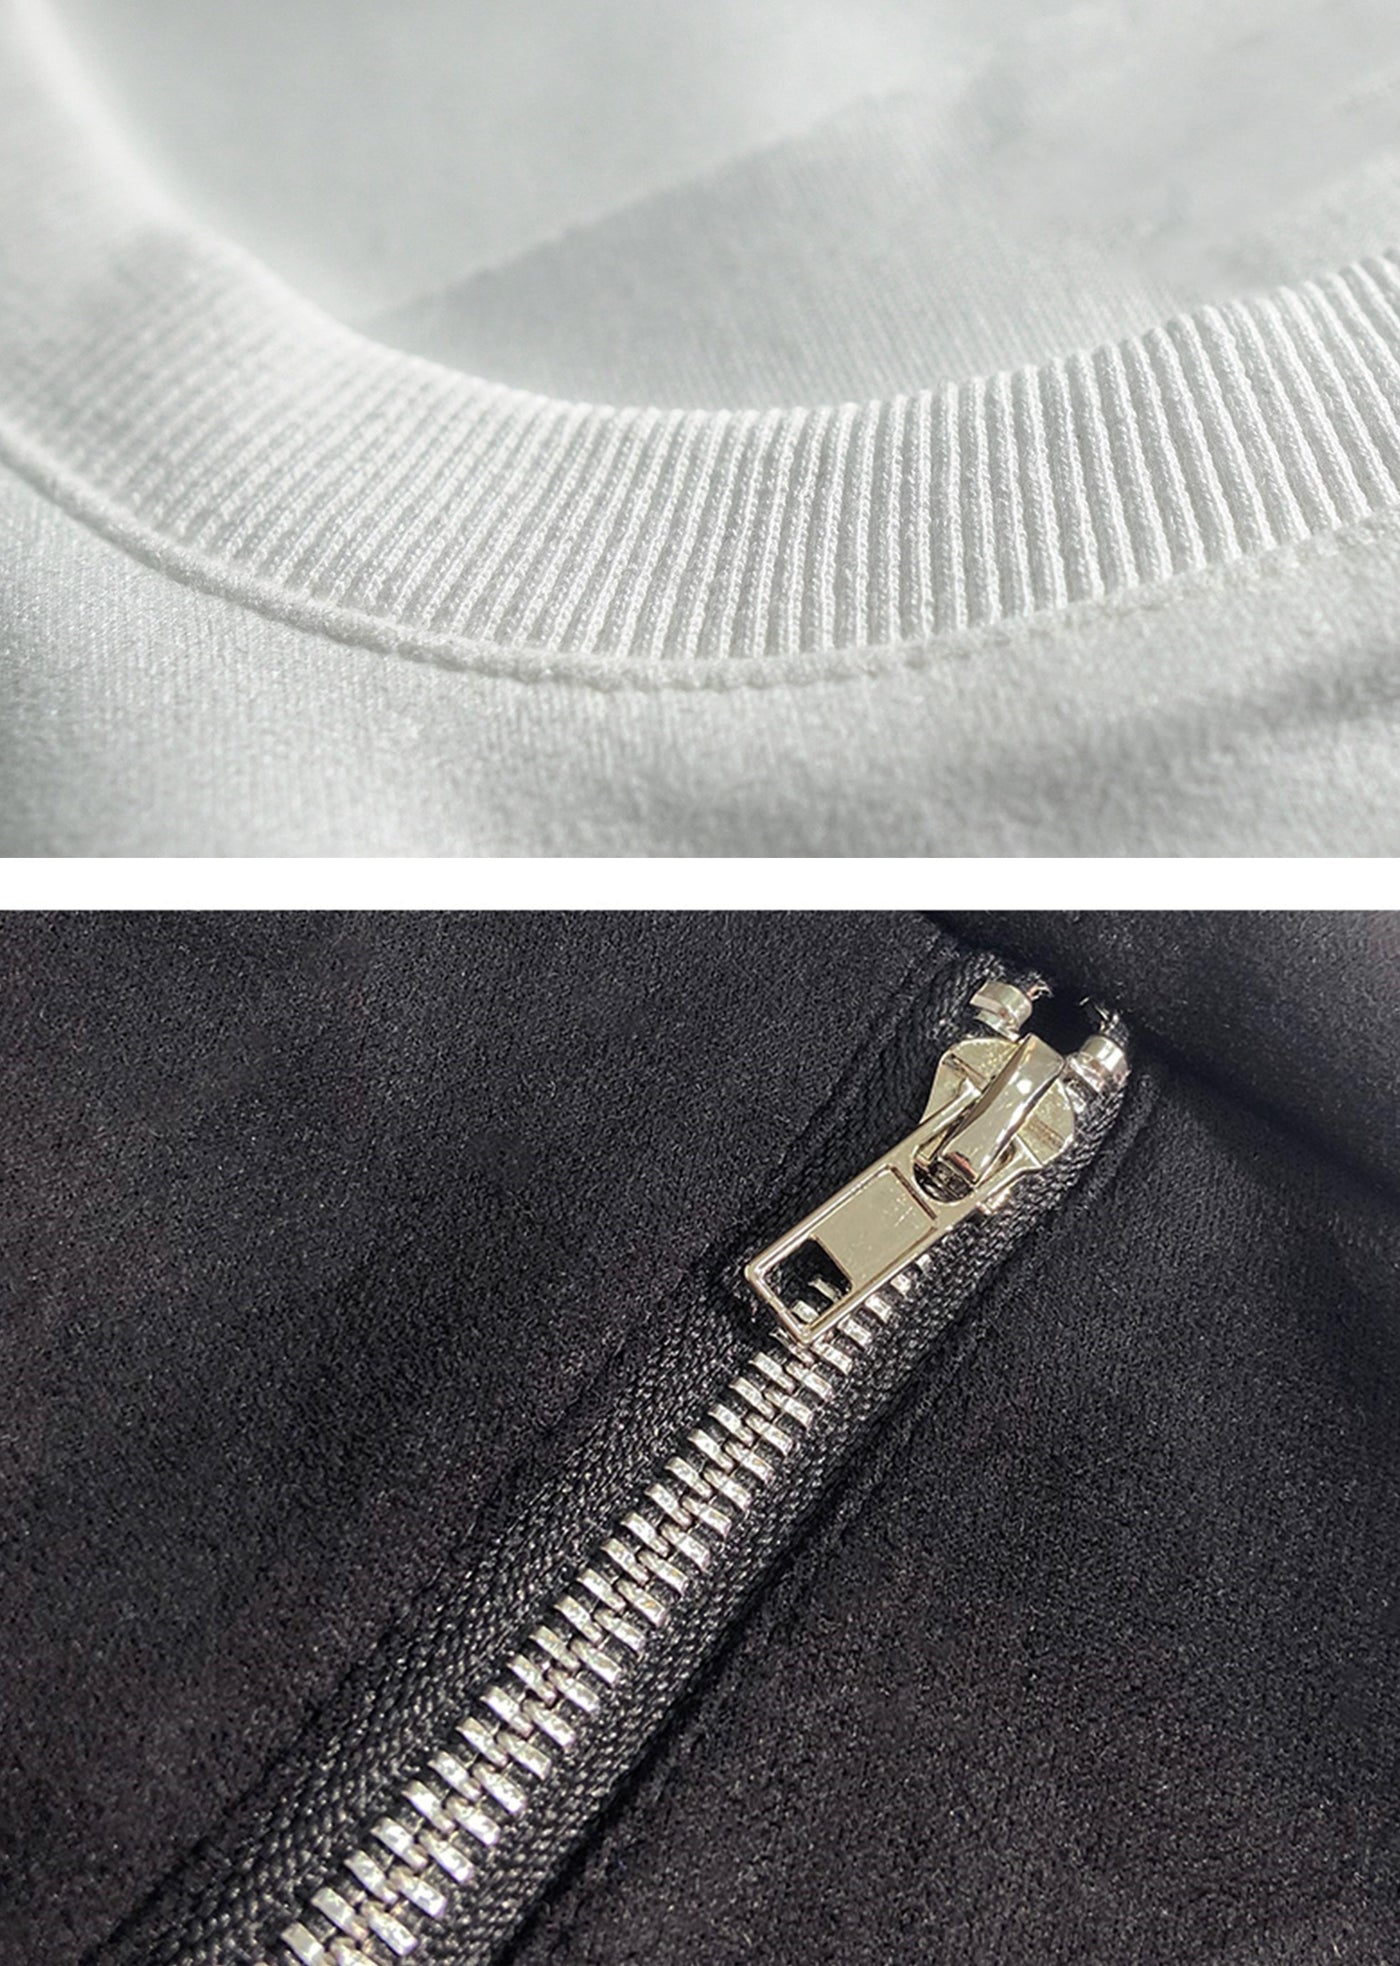 【UUCSCC】Thunder Point Full Zip Design Gimmick Short Sleeve T-Shirt  US0067